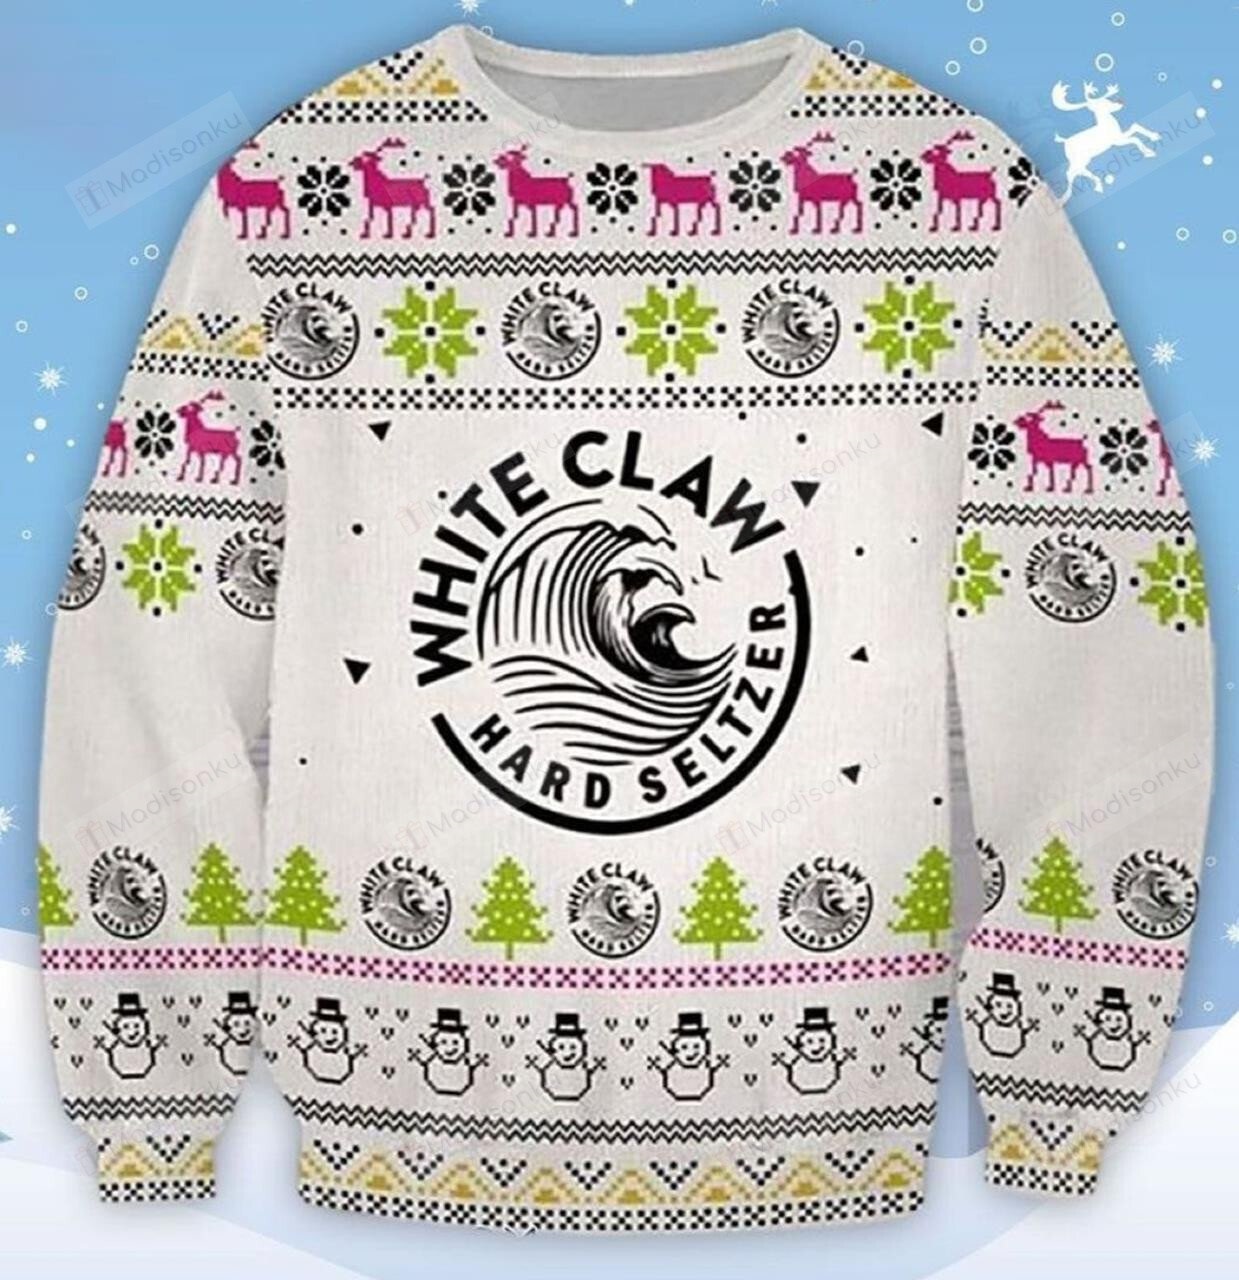 [ Amazing ] White Claws Hard Seltzer ugly christmas sweater – Saleoff 301121